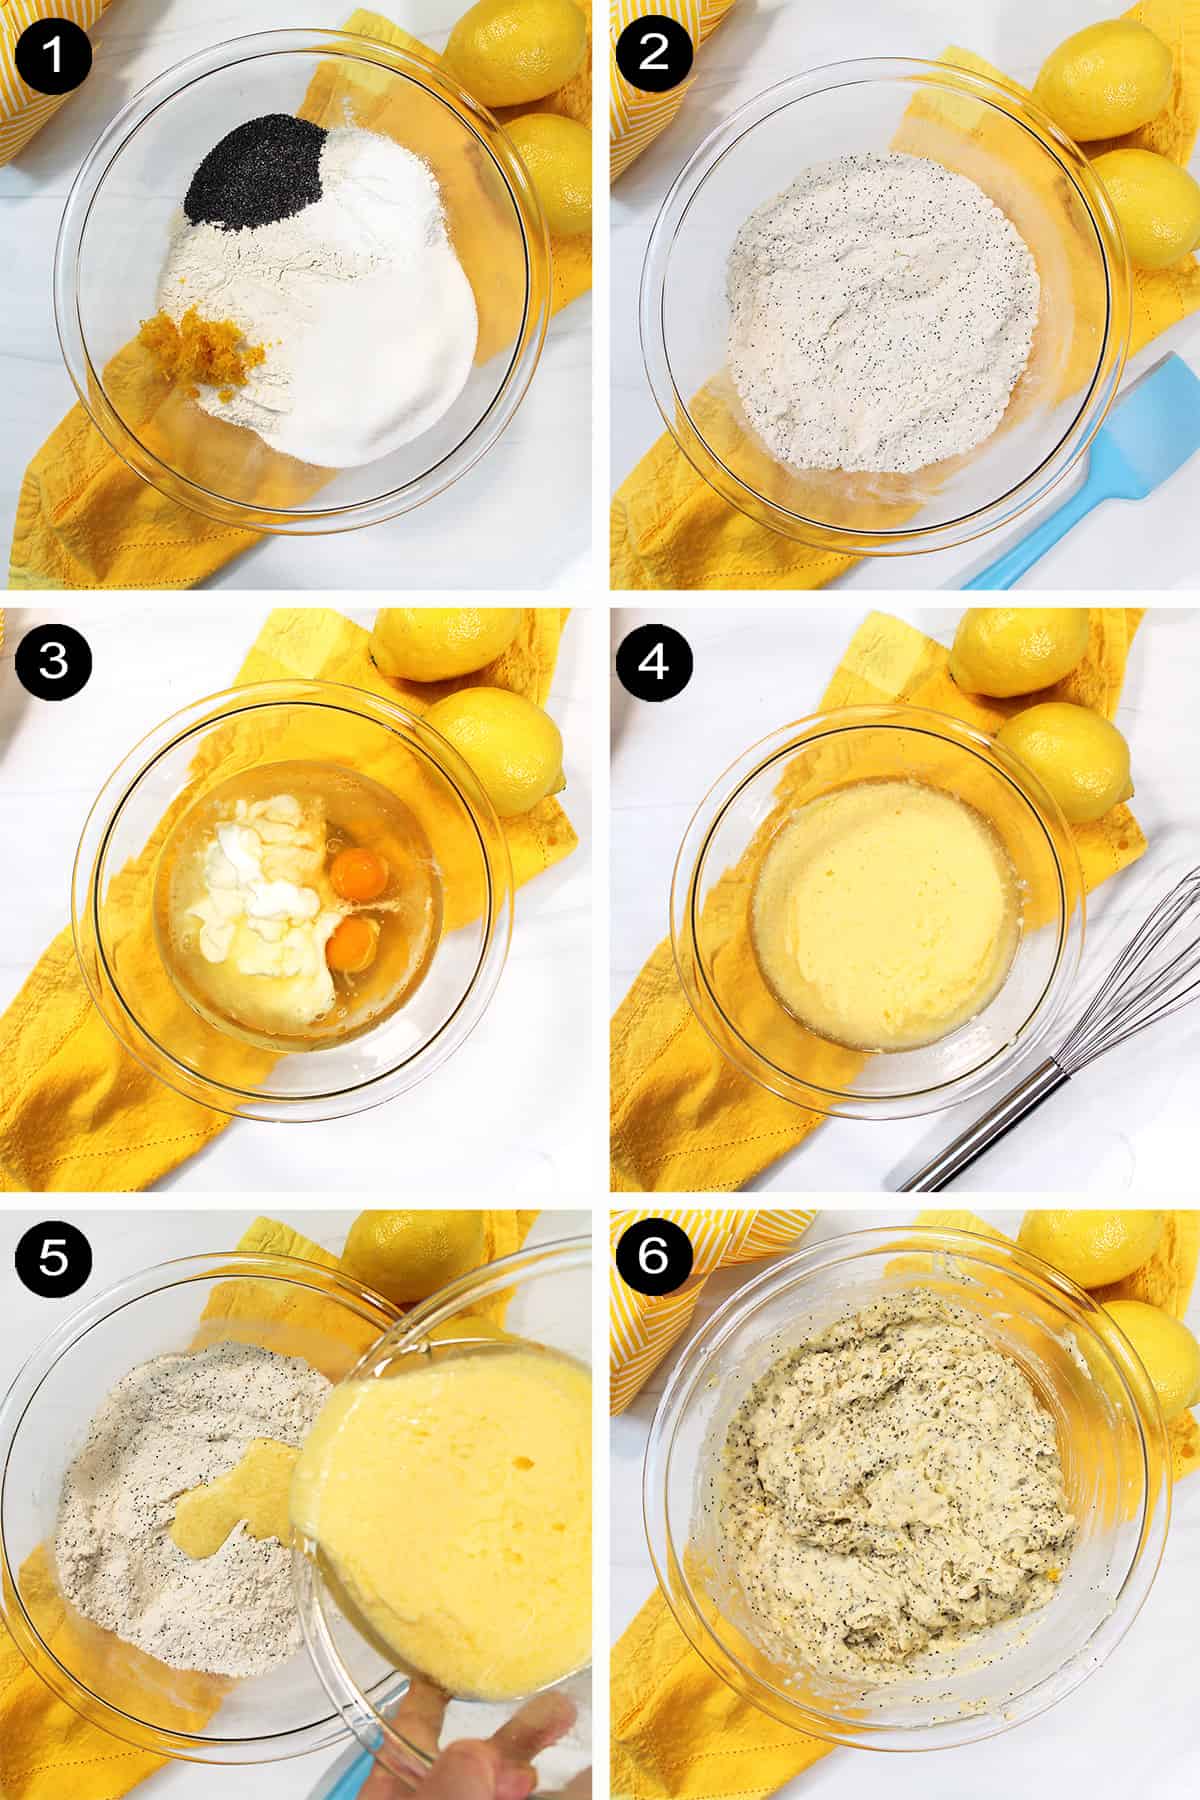 Steps to make lemon muffins batter.